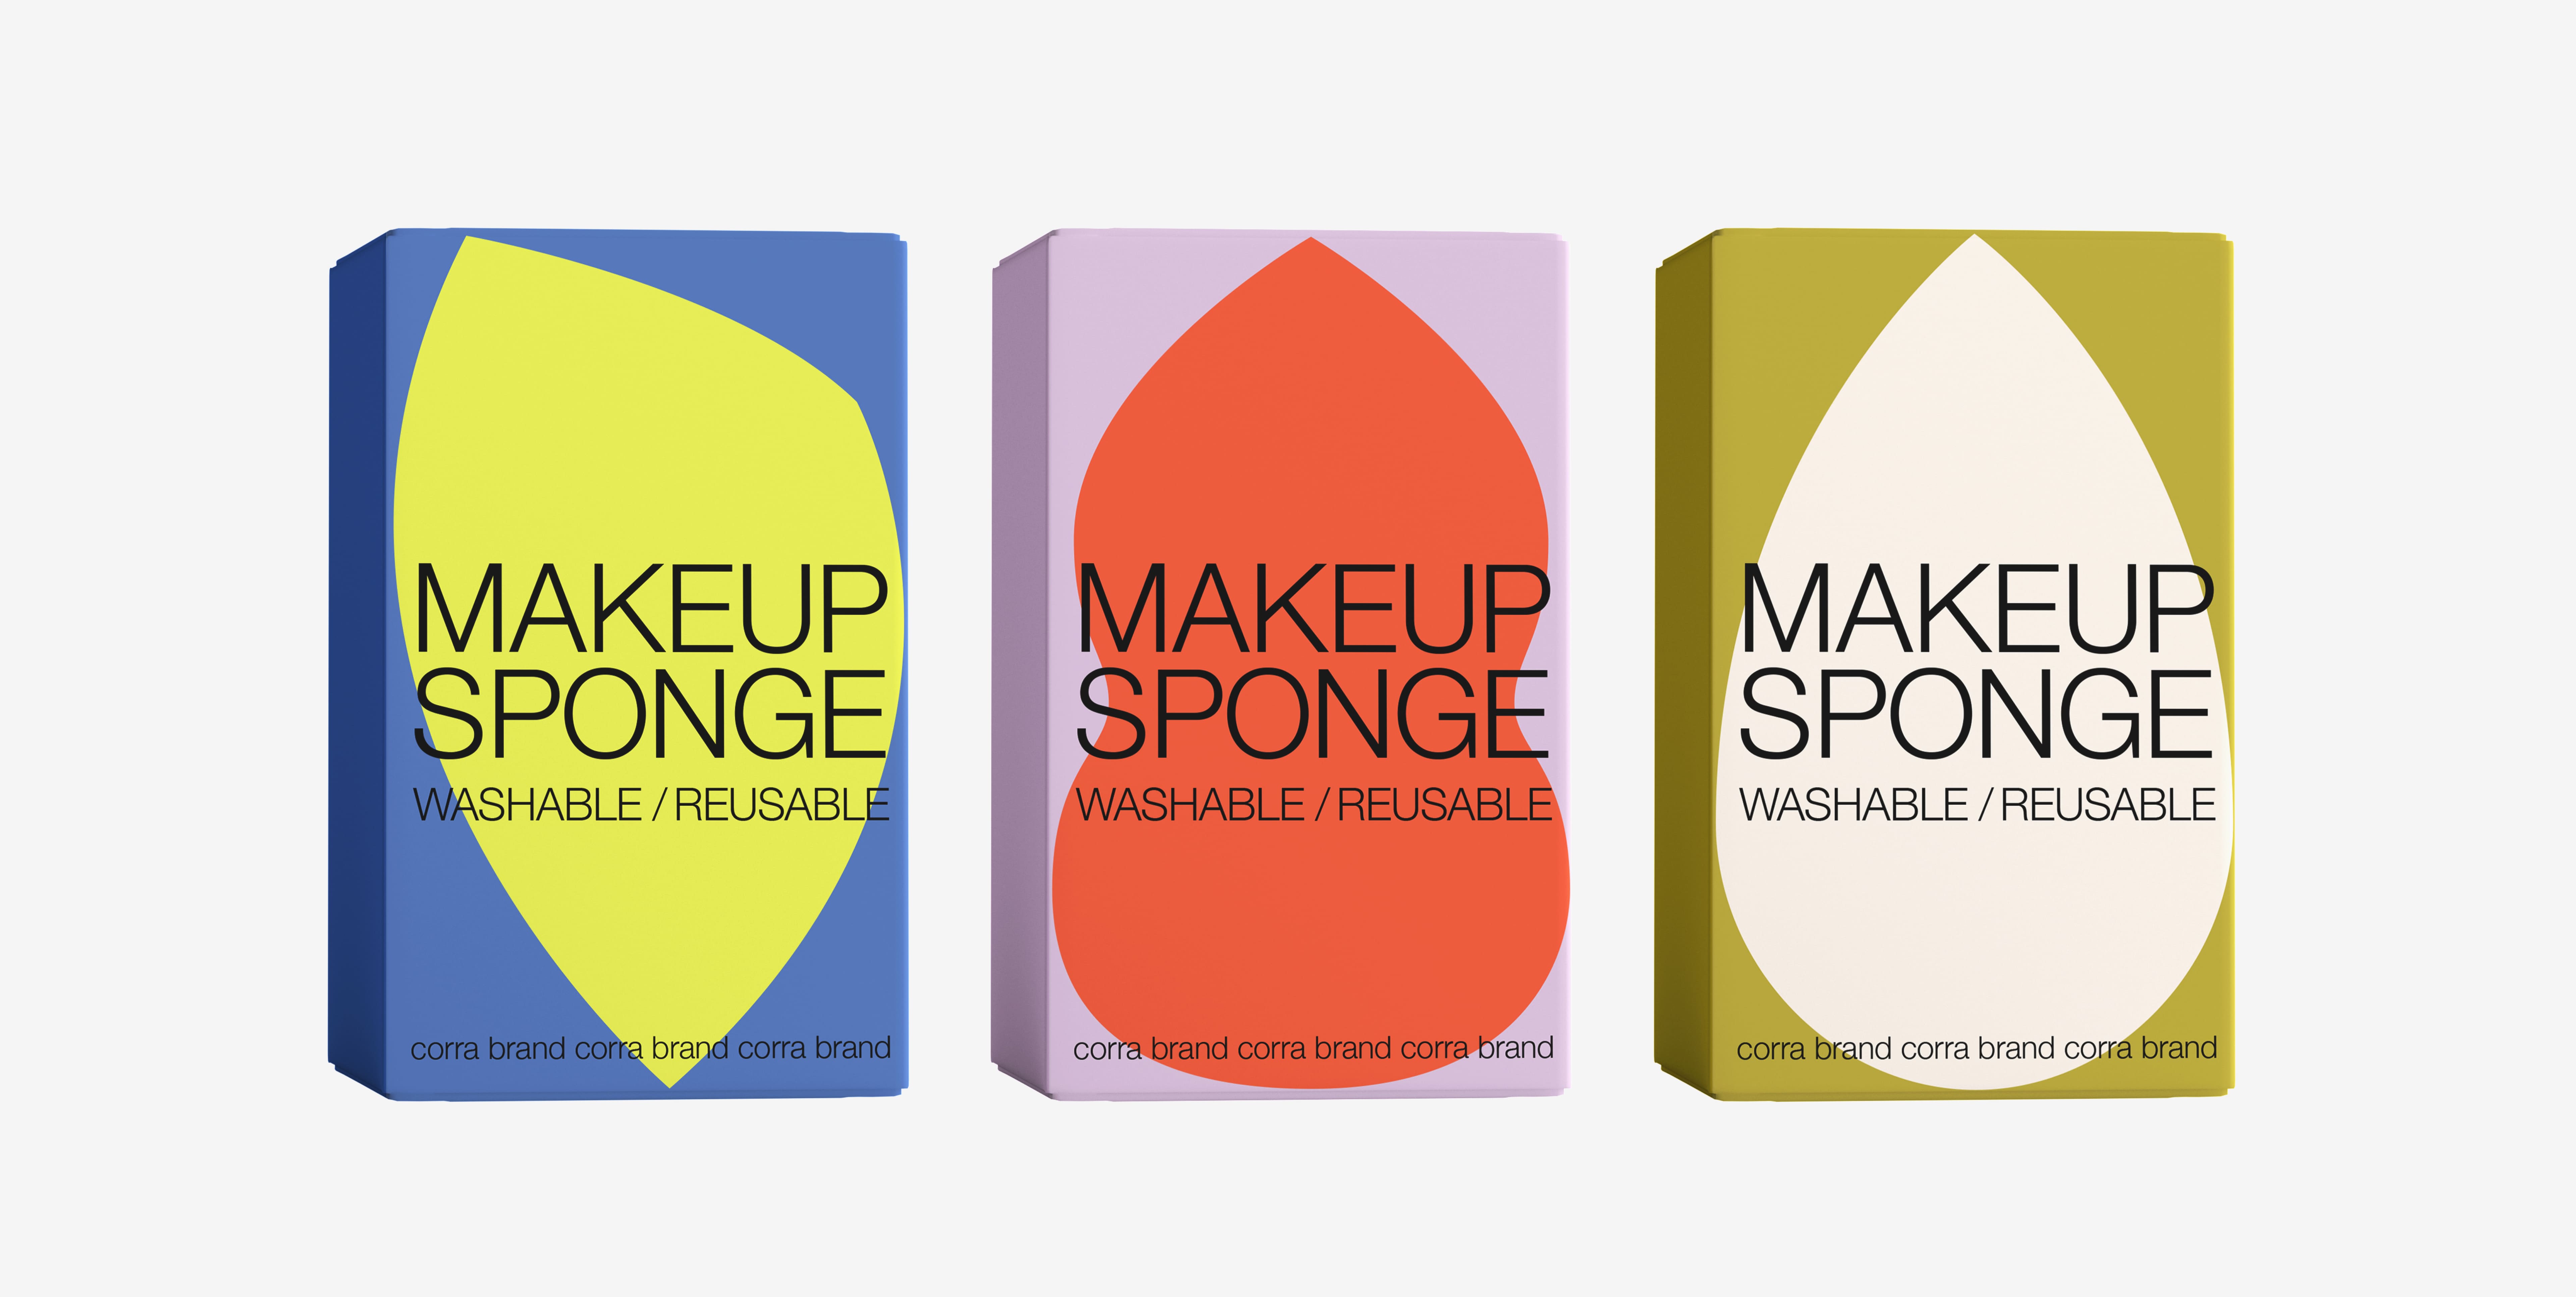 Makeup Sponge Packaging Design